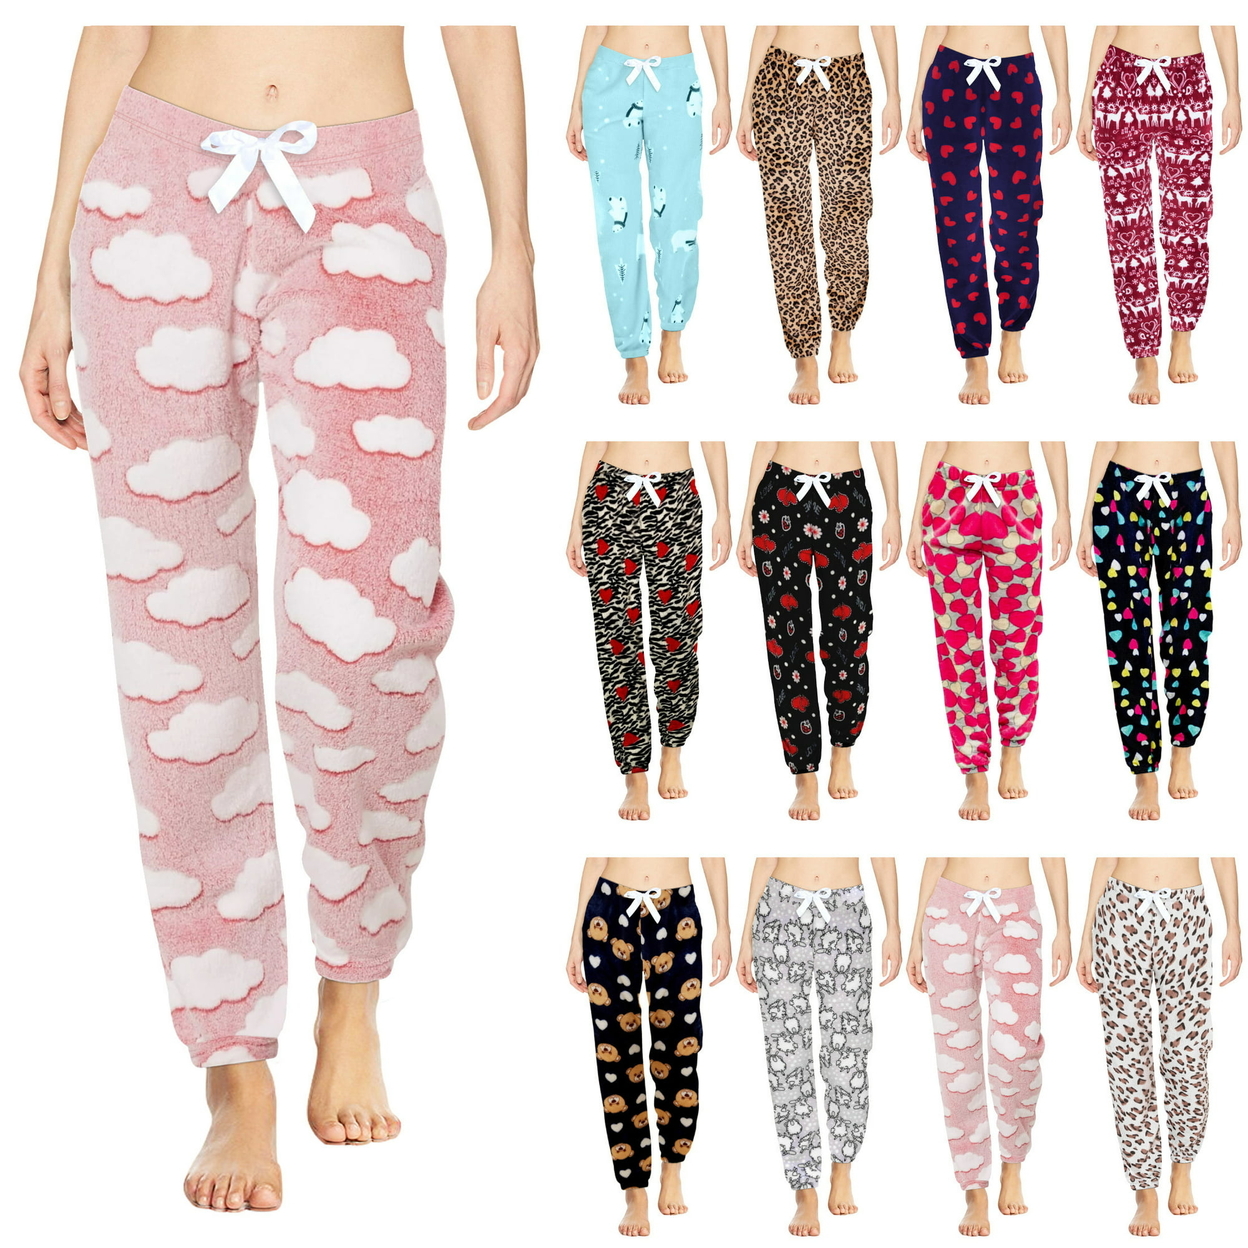 3-Pack: Women's Solid & Printed Ultra-Soft Comfy Stretch Micro-Fleece Pajama Lounge Pants - Medium, Animal